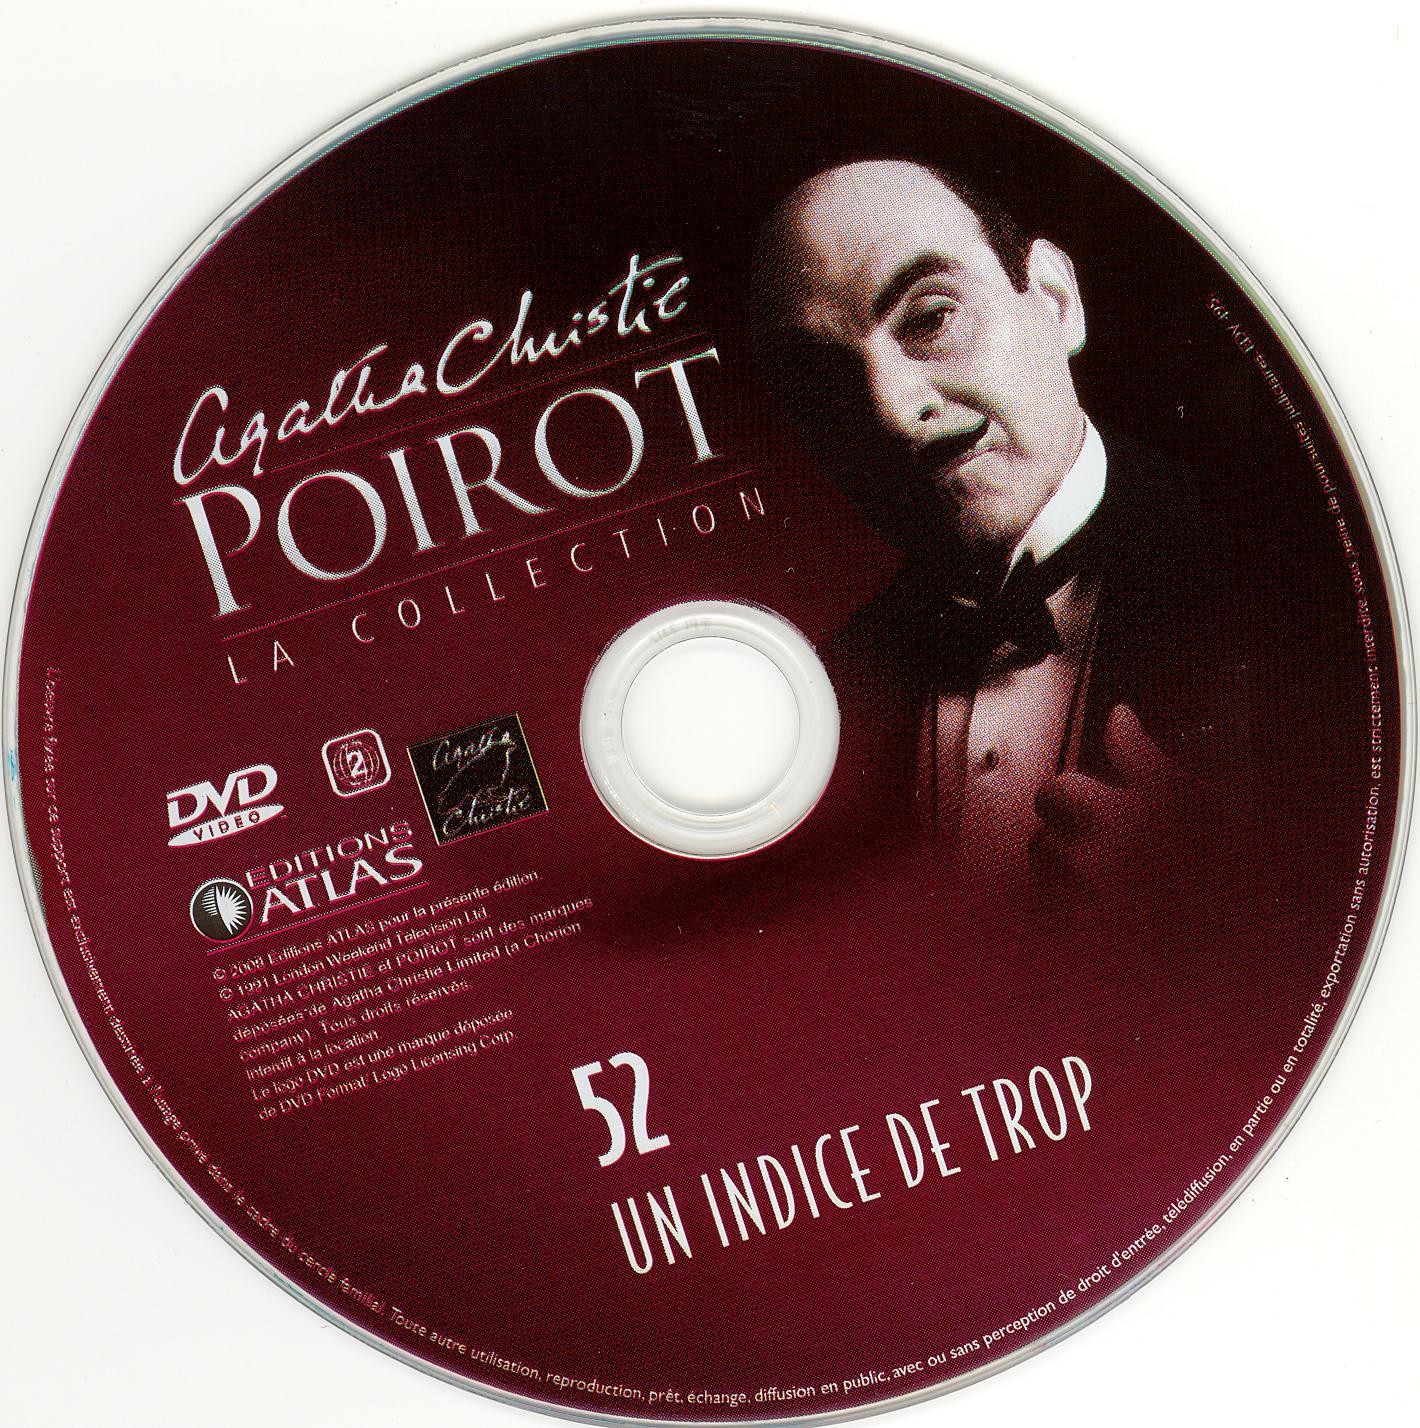 Hercule Poirot vol 52